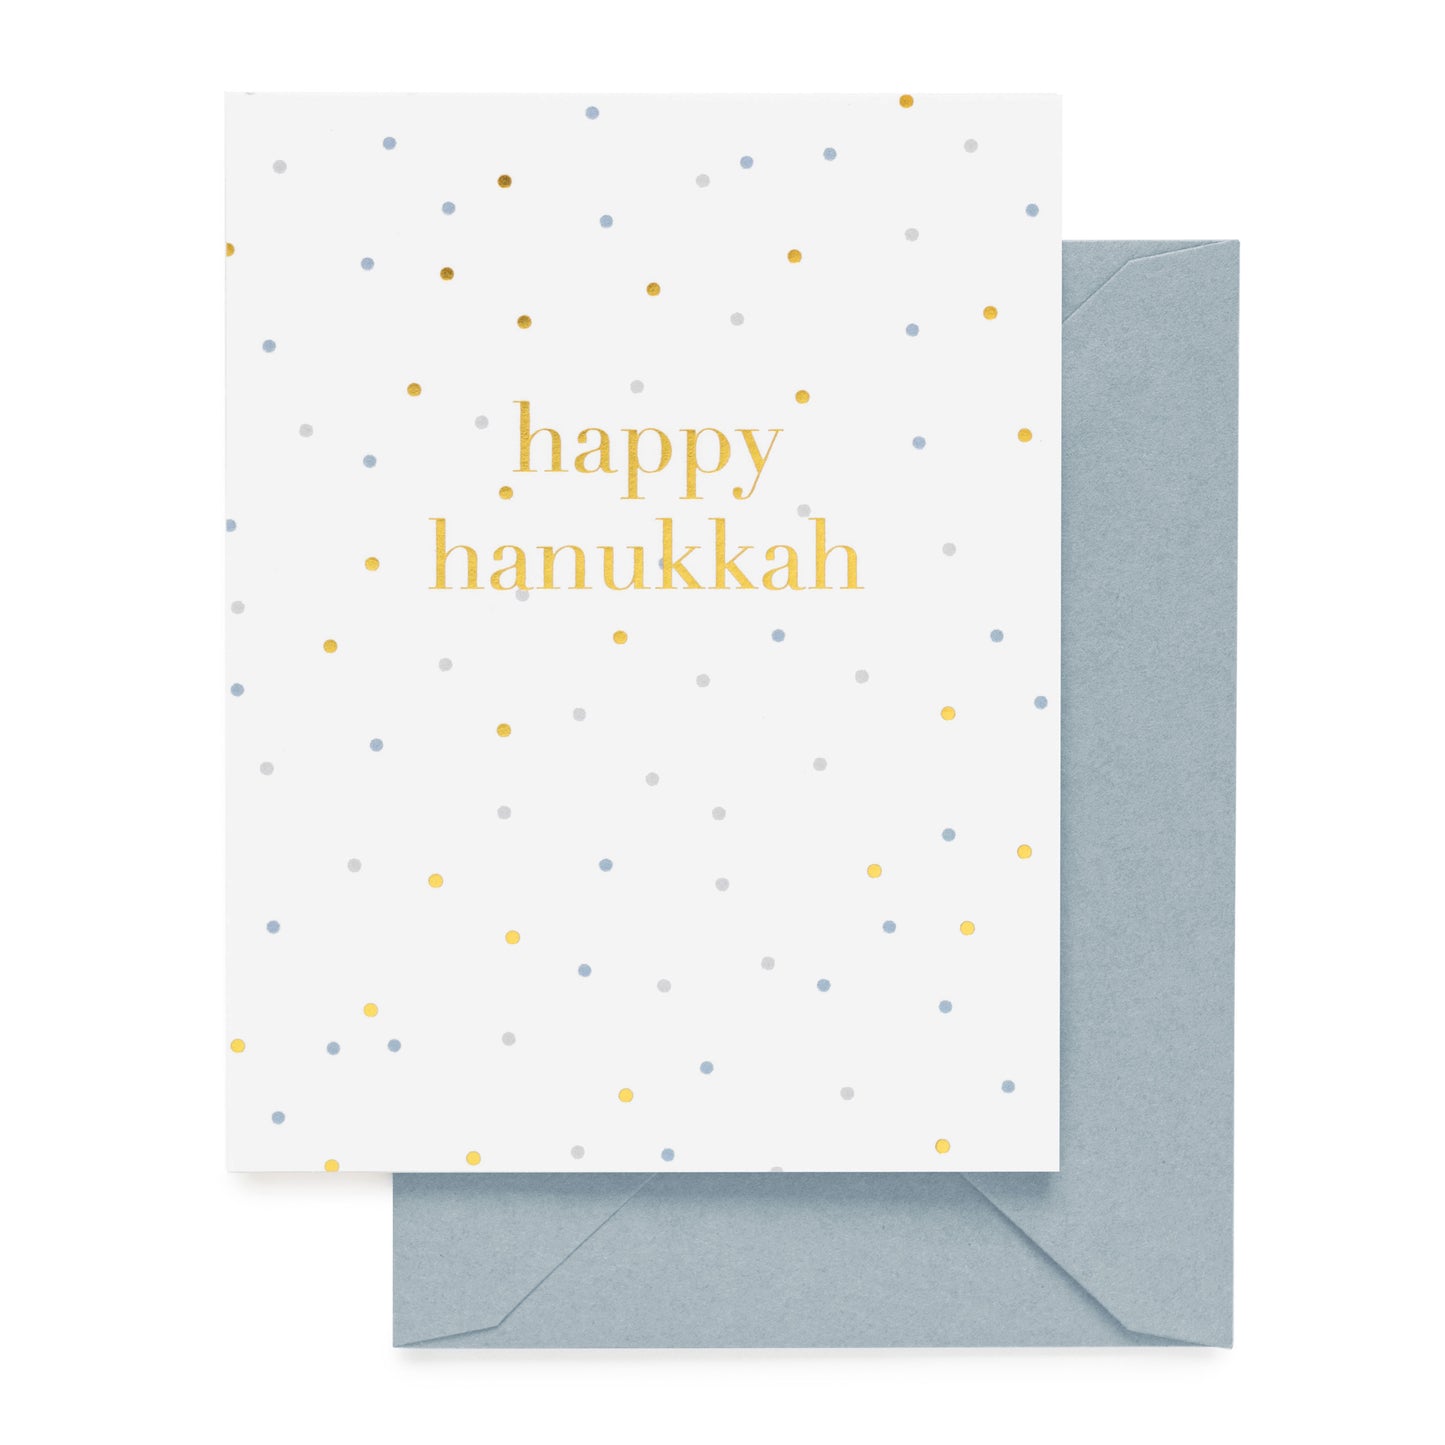 happy hanukkah card with slate blue envelope